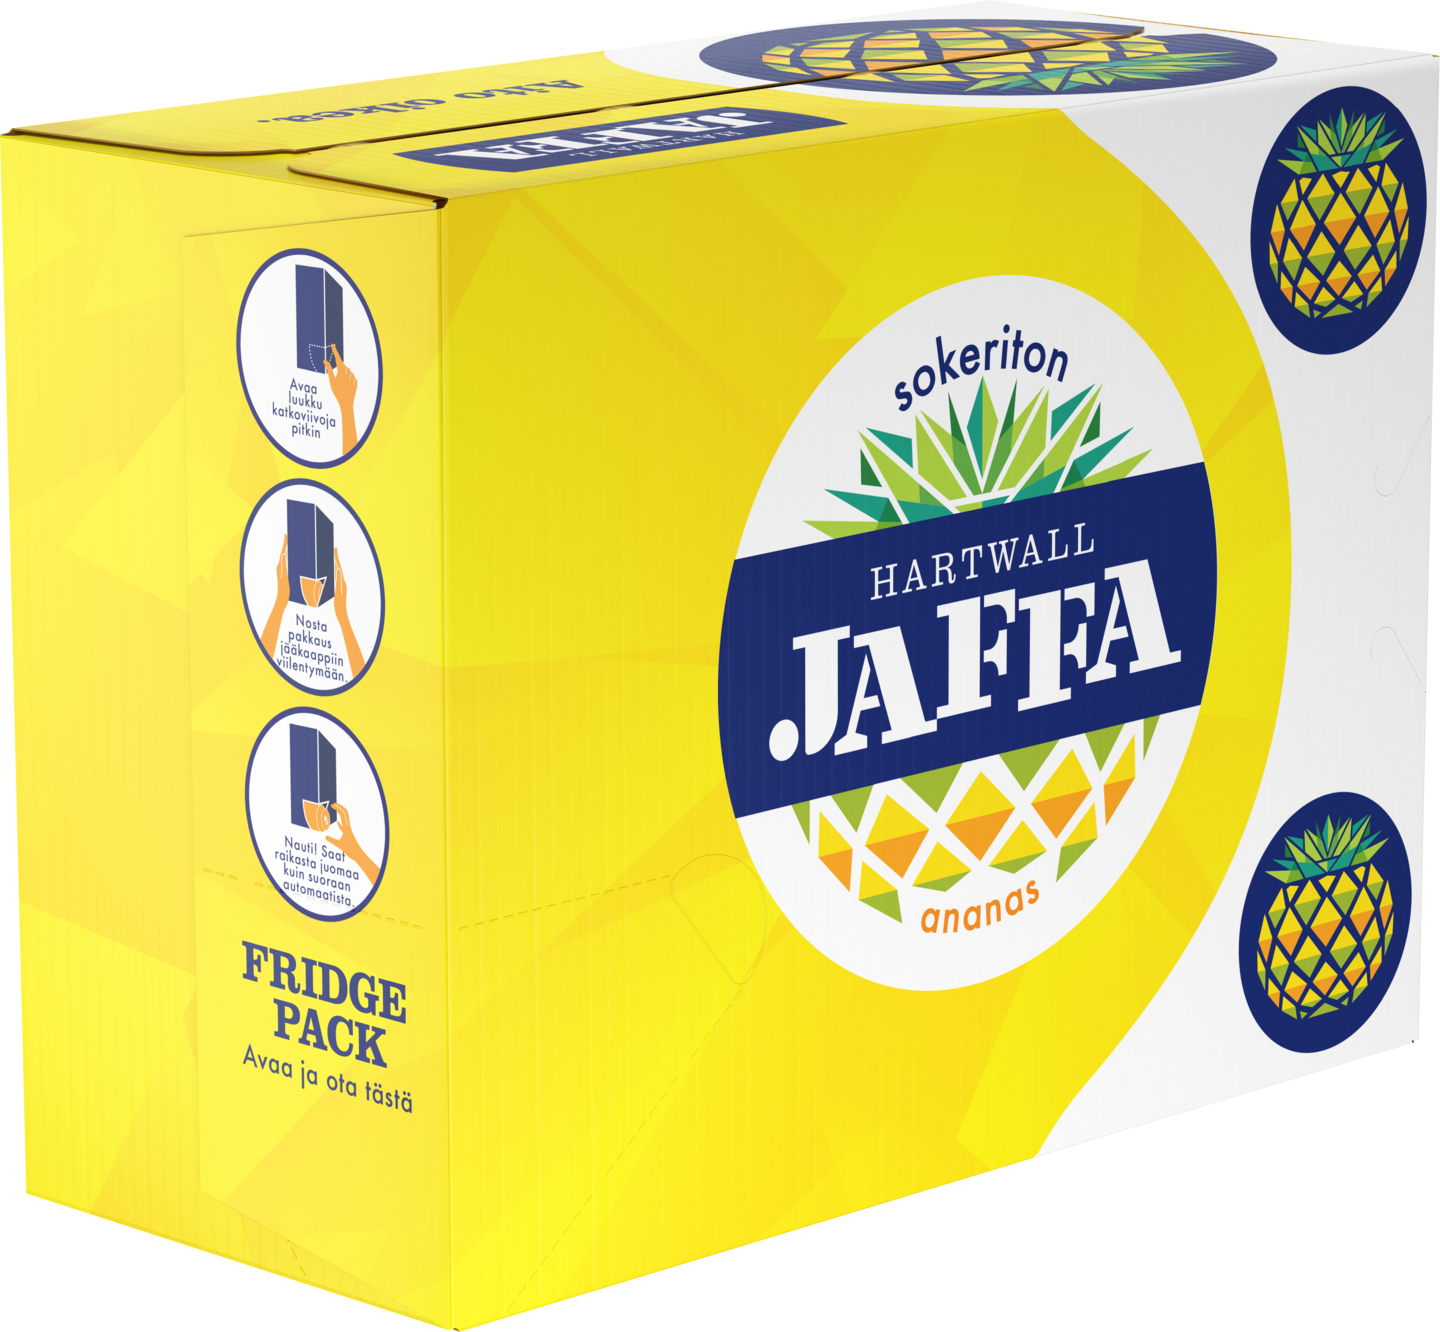 Hartwall Jaffa Ananas sokeriton virvoitusjuoma 0,33l 12-pack